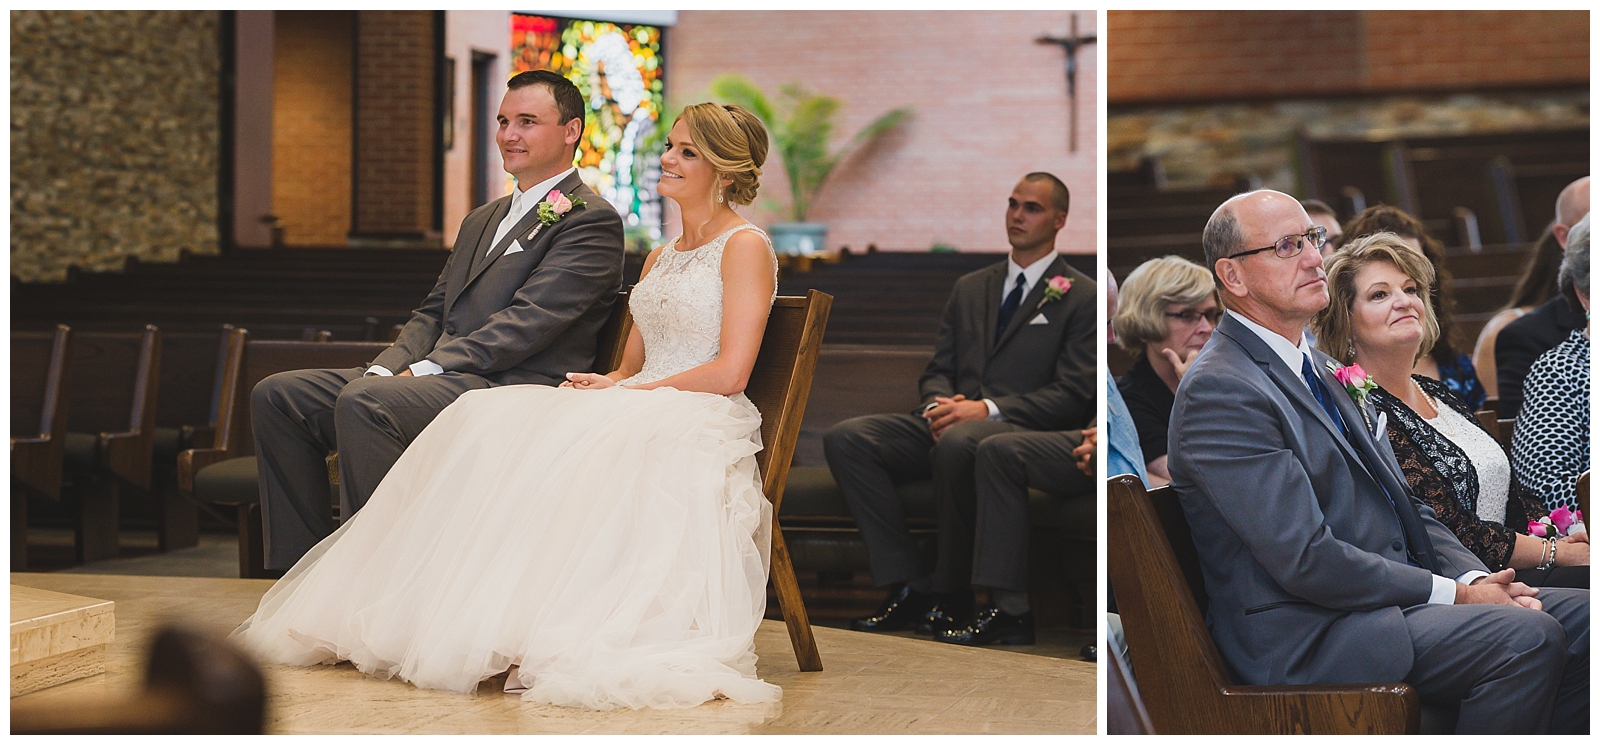 Wedding photography at Cure of Ars Catholic Church by Kansas City wedding photographers Wisdom-Watson Weddings.